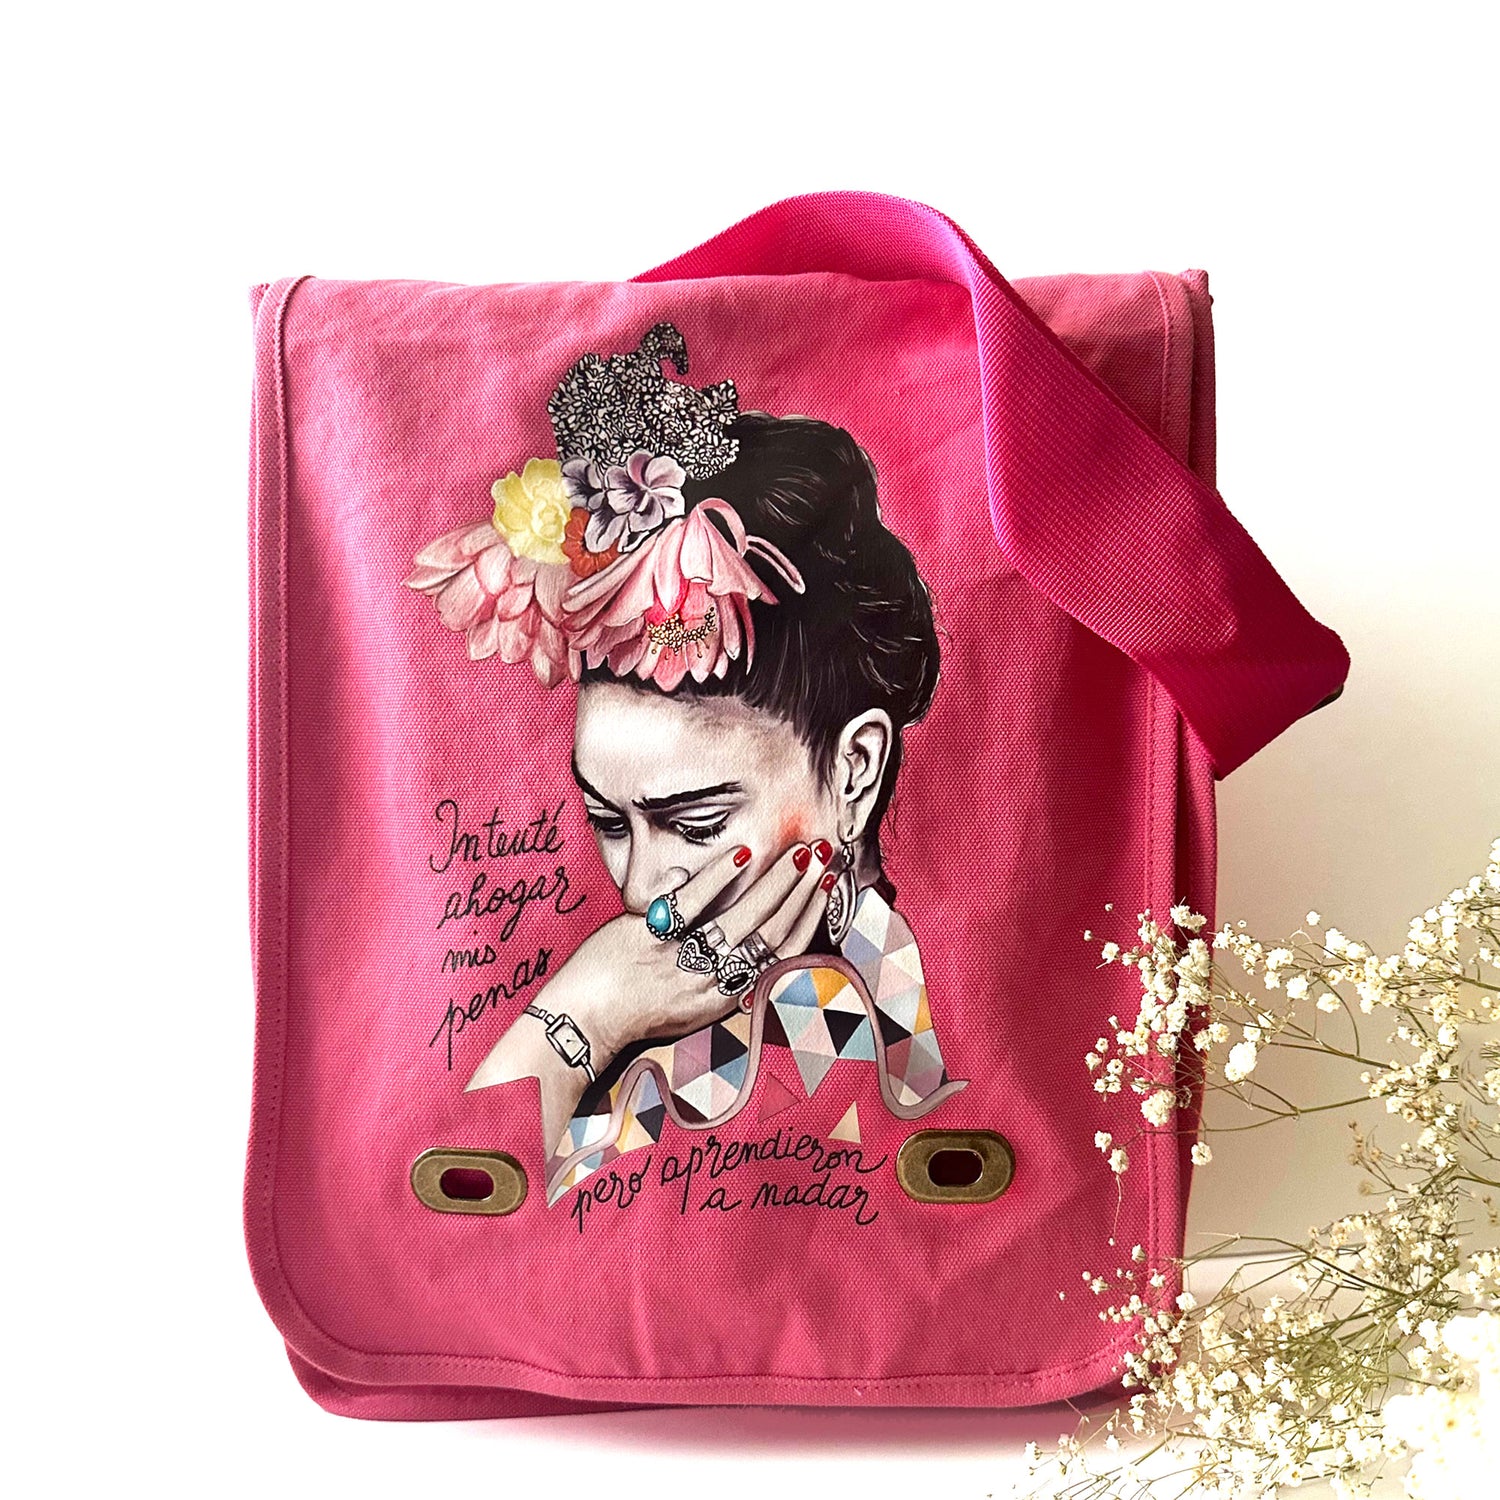 Frida Kahlo bags handbags backpacks girl gift idea birthday back to school little frida mexico folk art red and pink flowers 